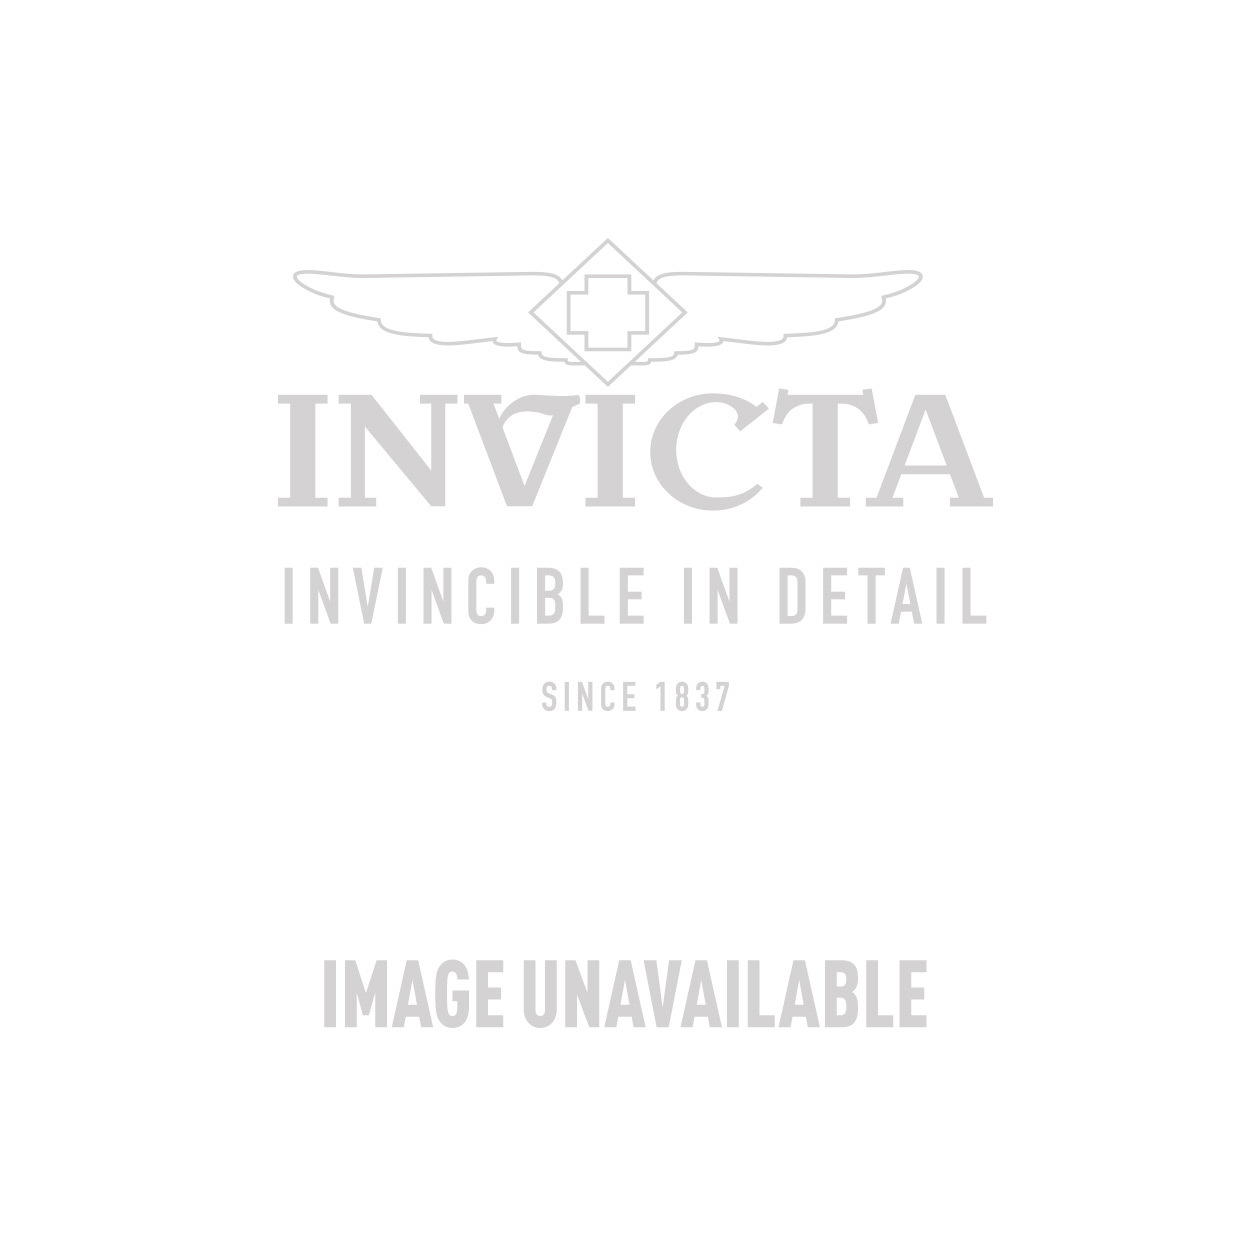 Invicta Pro Diver SCUBA Swiss Movement Quartz Stainless Steel - Model 17882